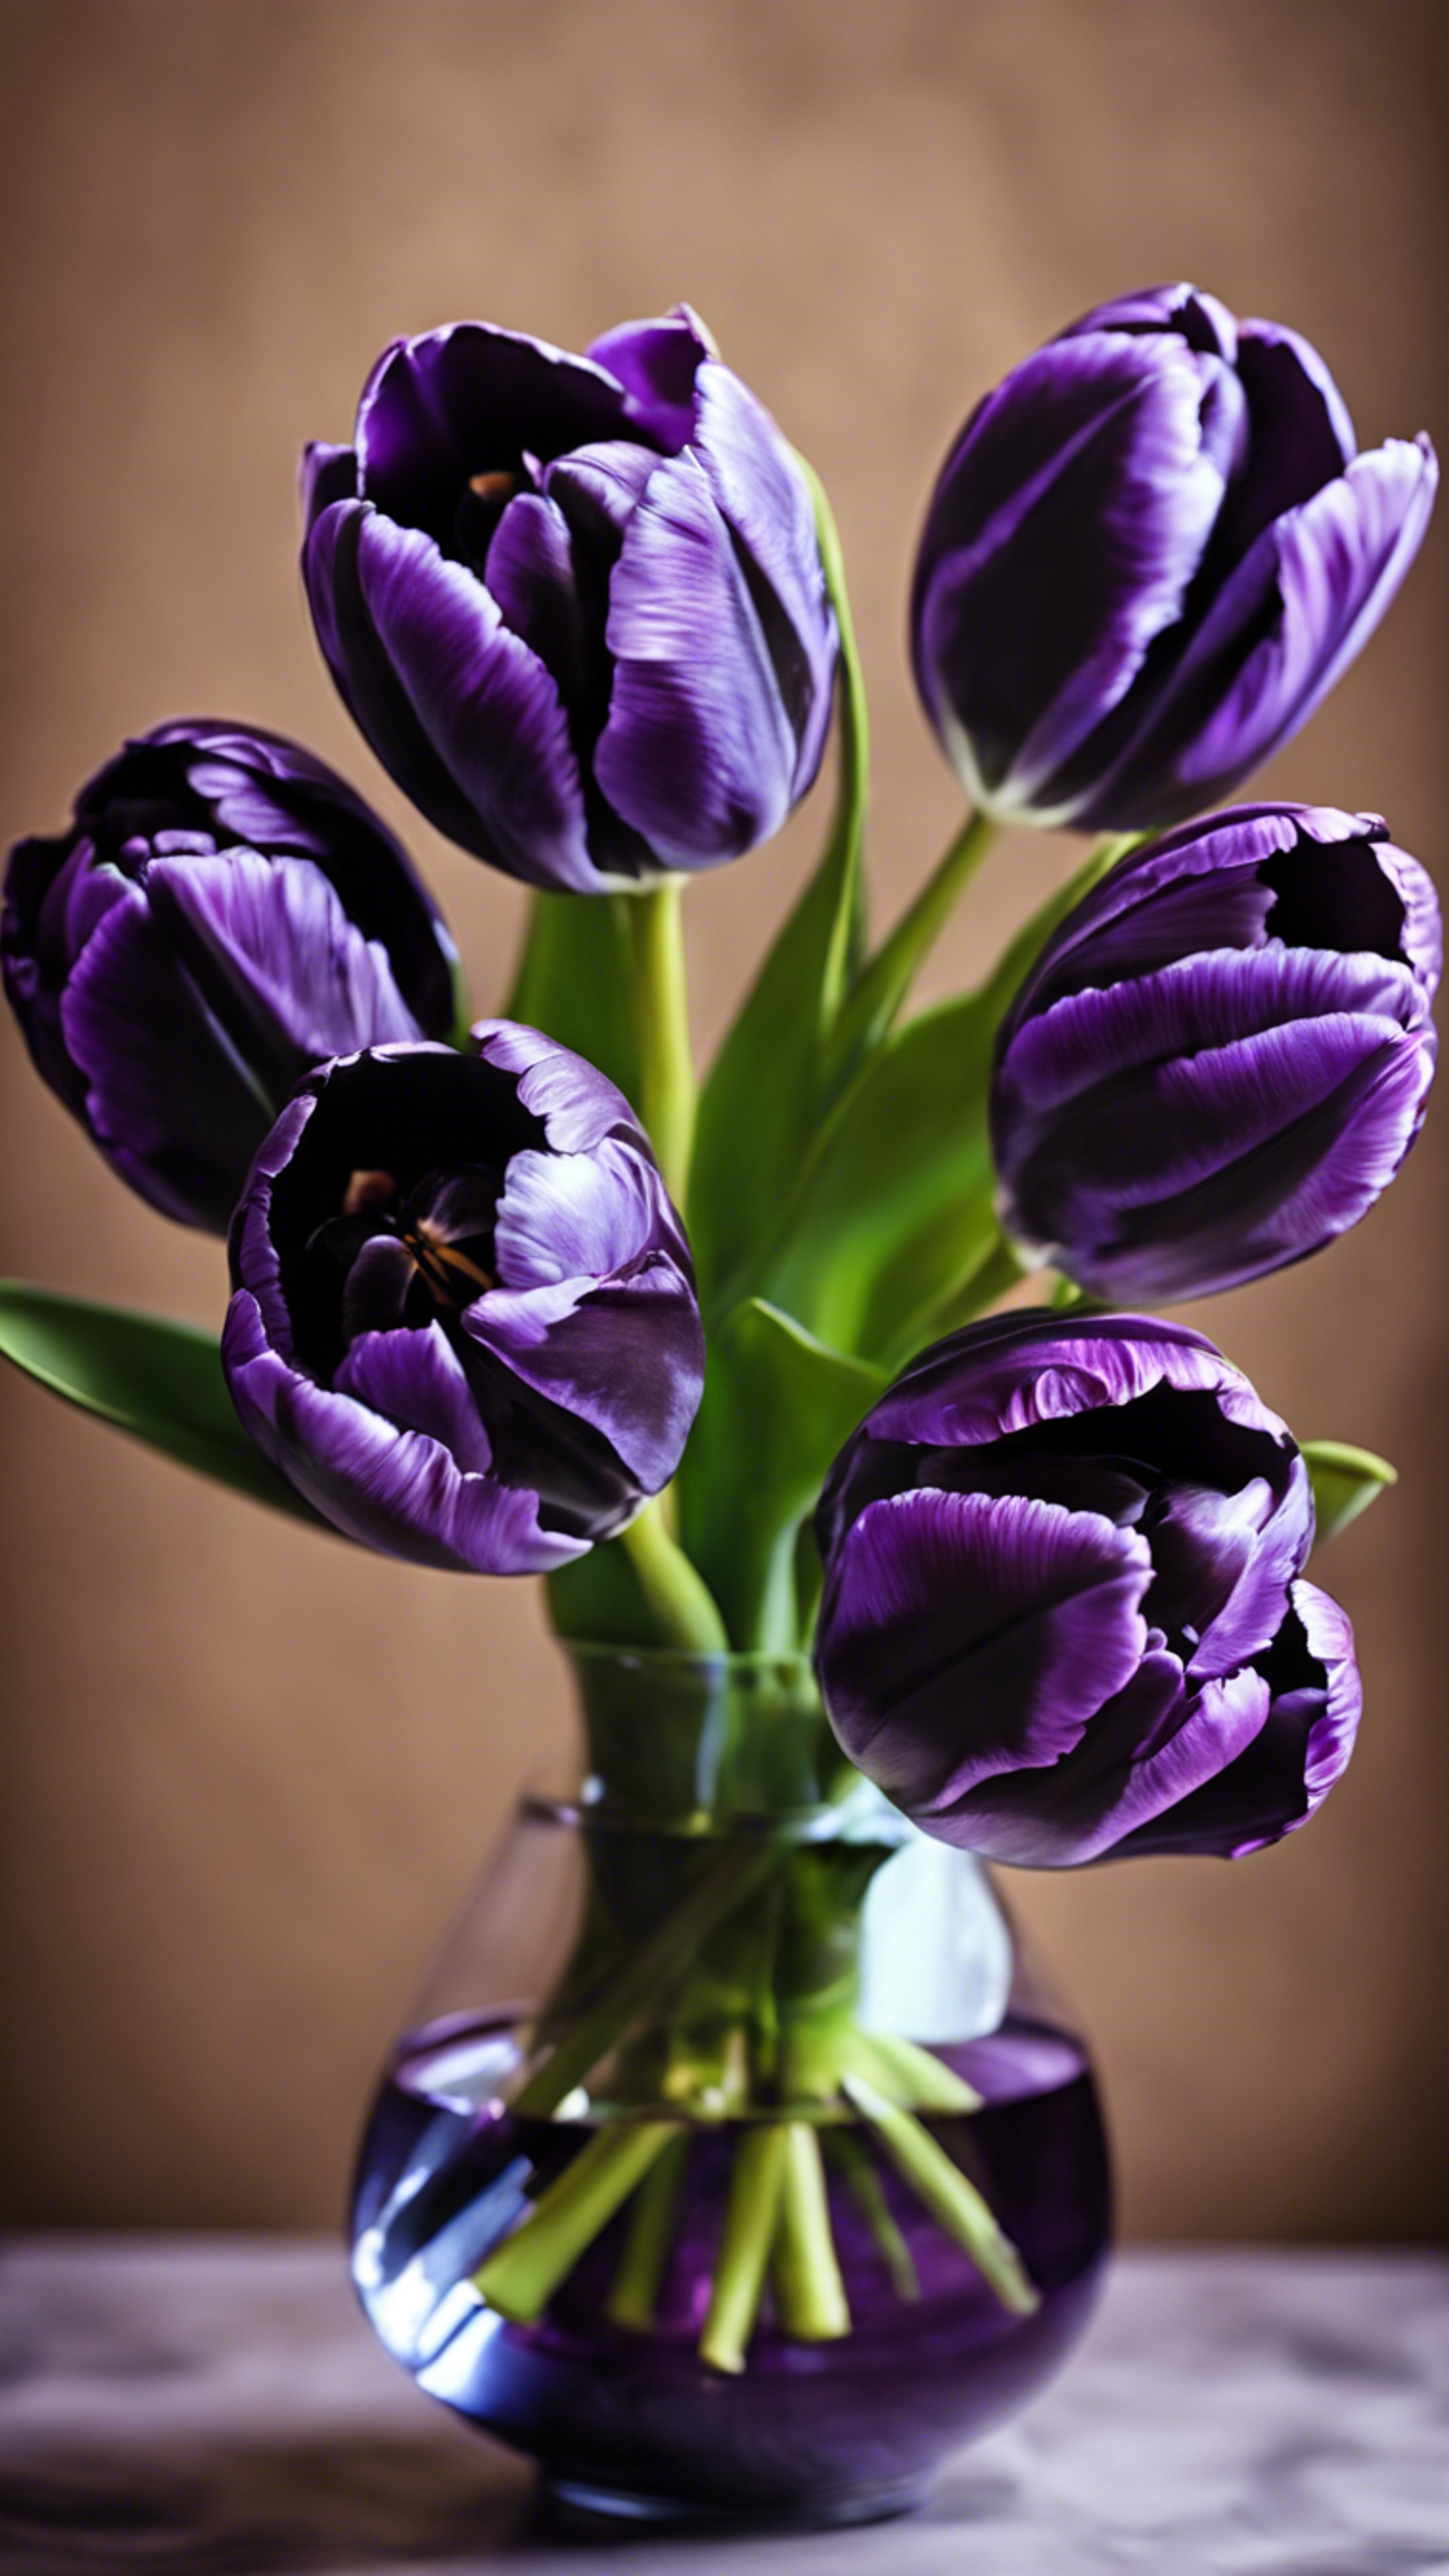 Black tulips with purple edges in full bloom in an elegant vase. Шпалери[bf30bf151b944cb69afa]